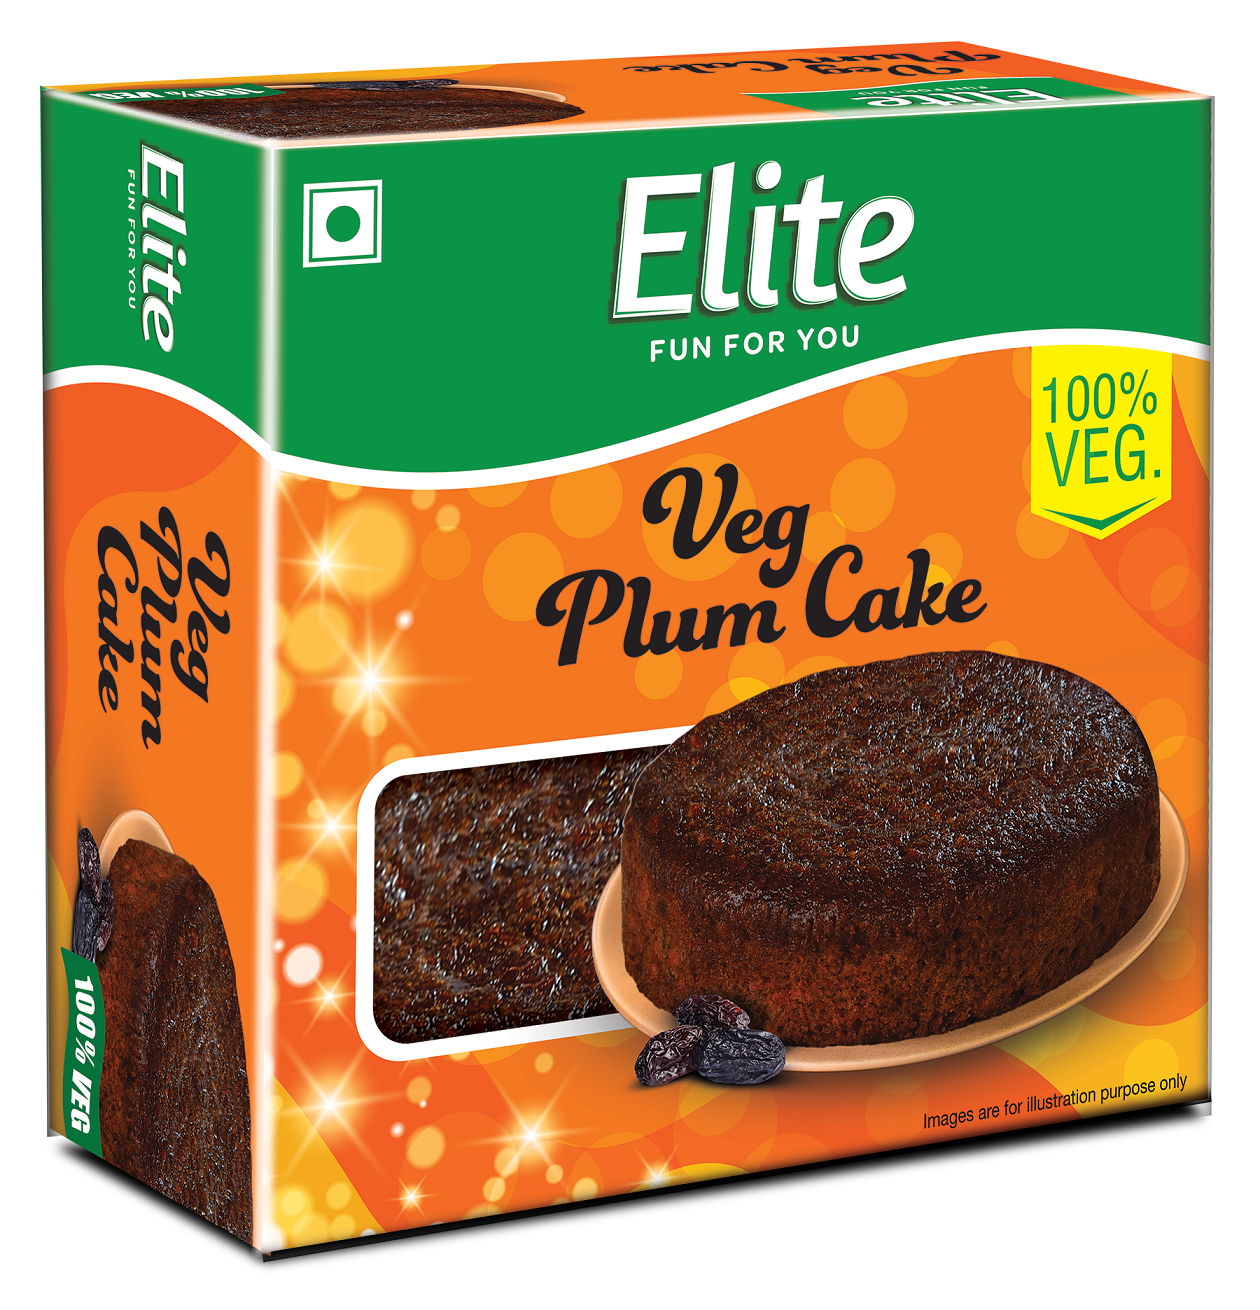 Veg Plum Cake